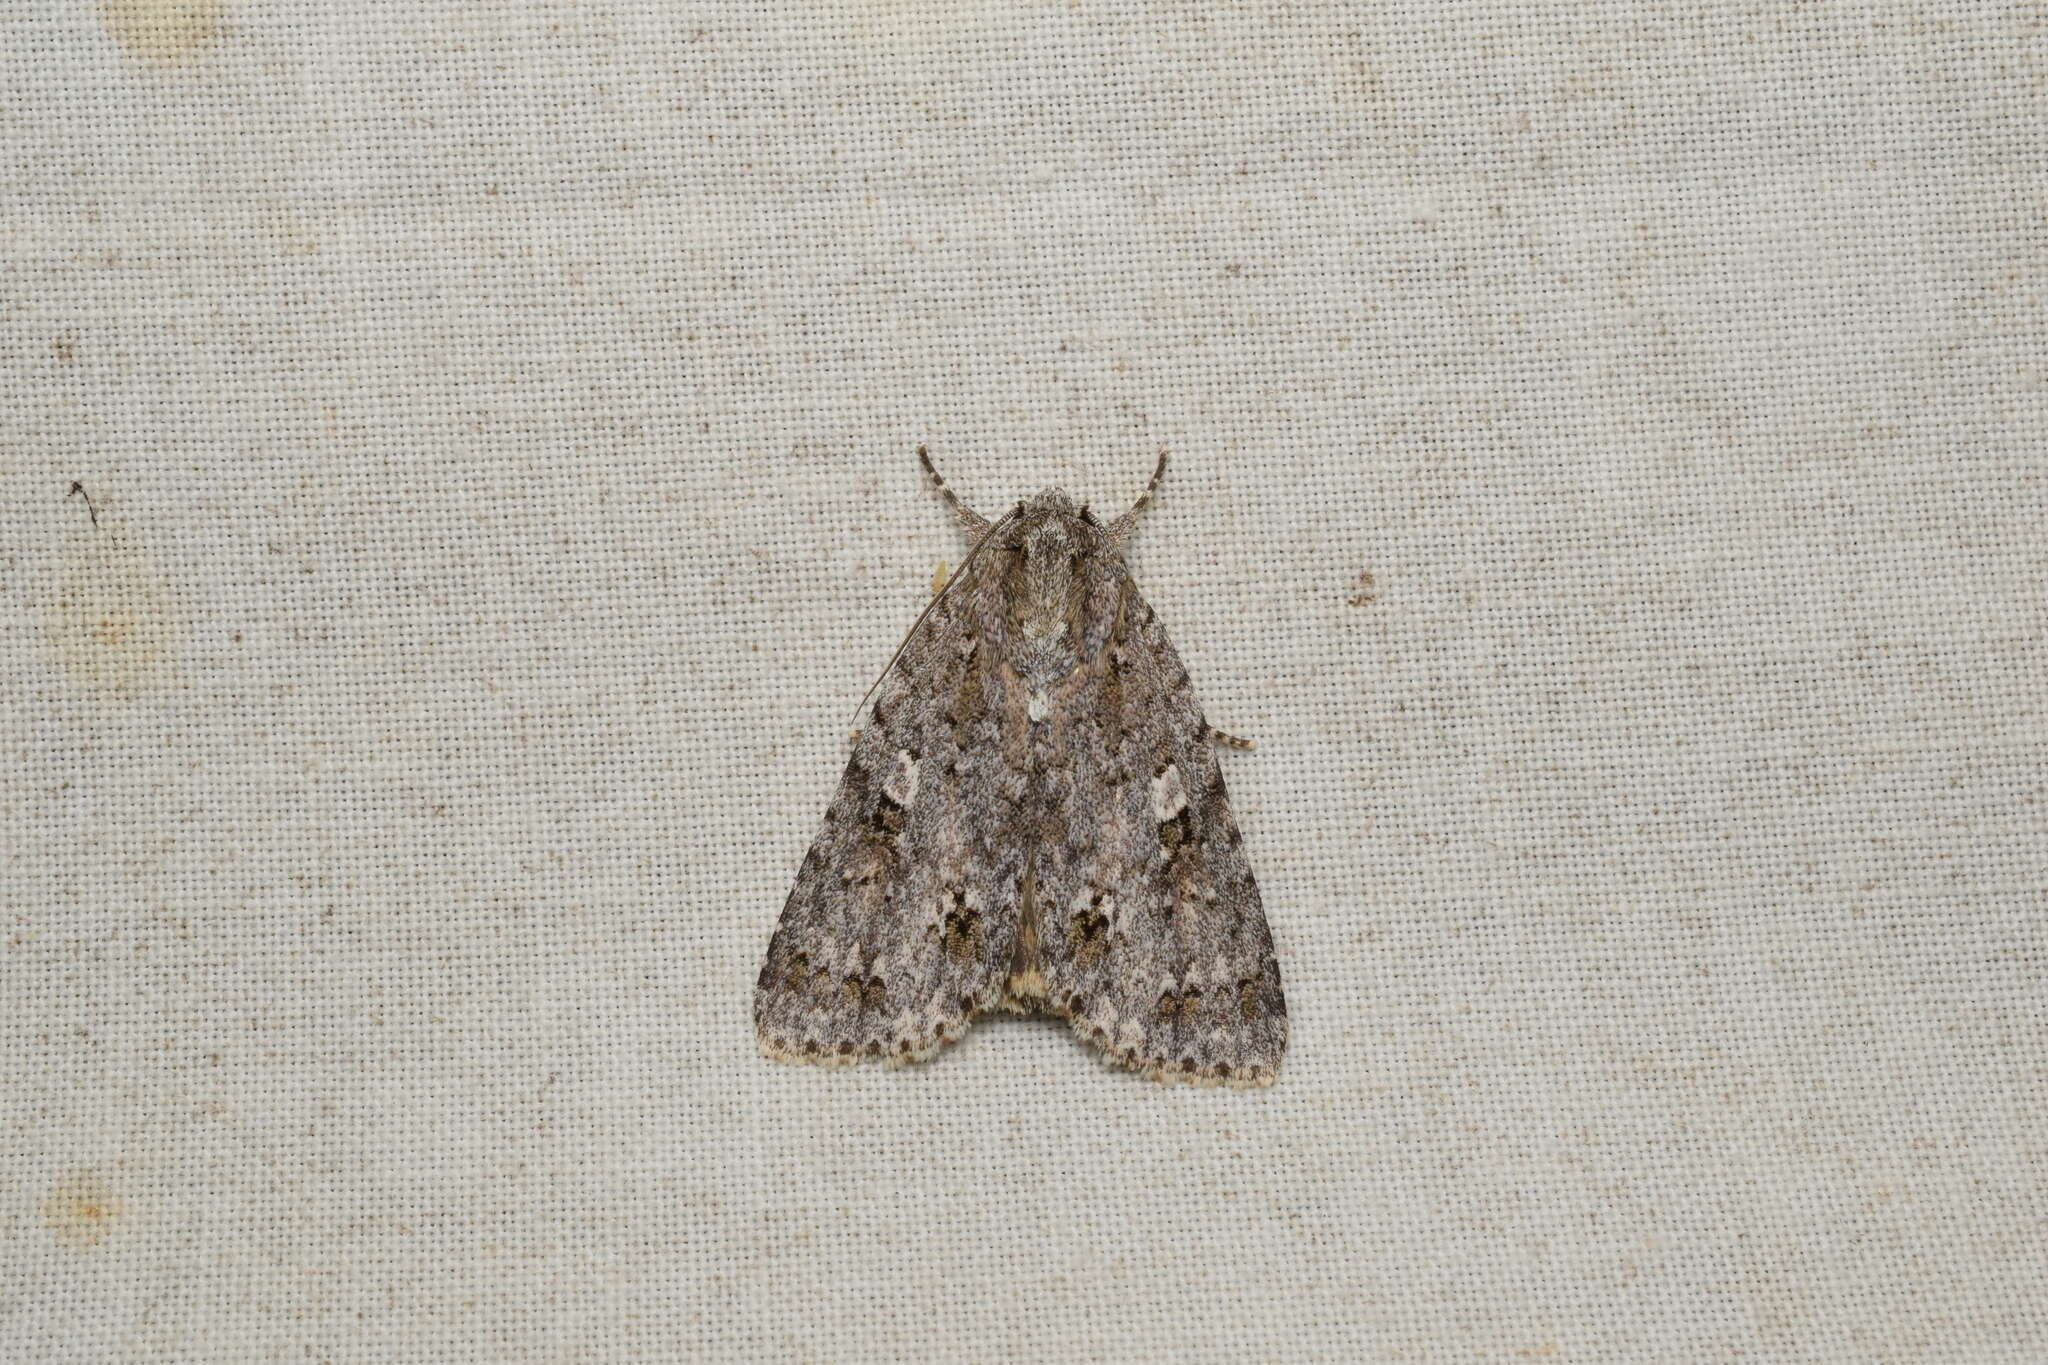 Image of Acronicta albistigma Hampson 1909